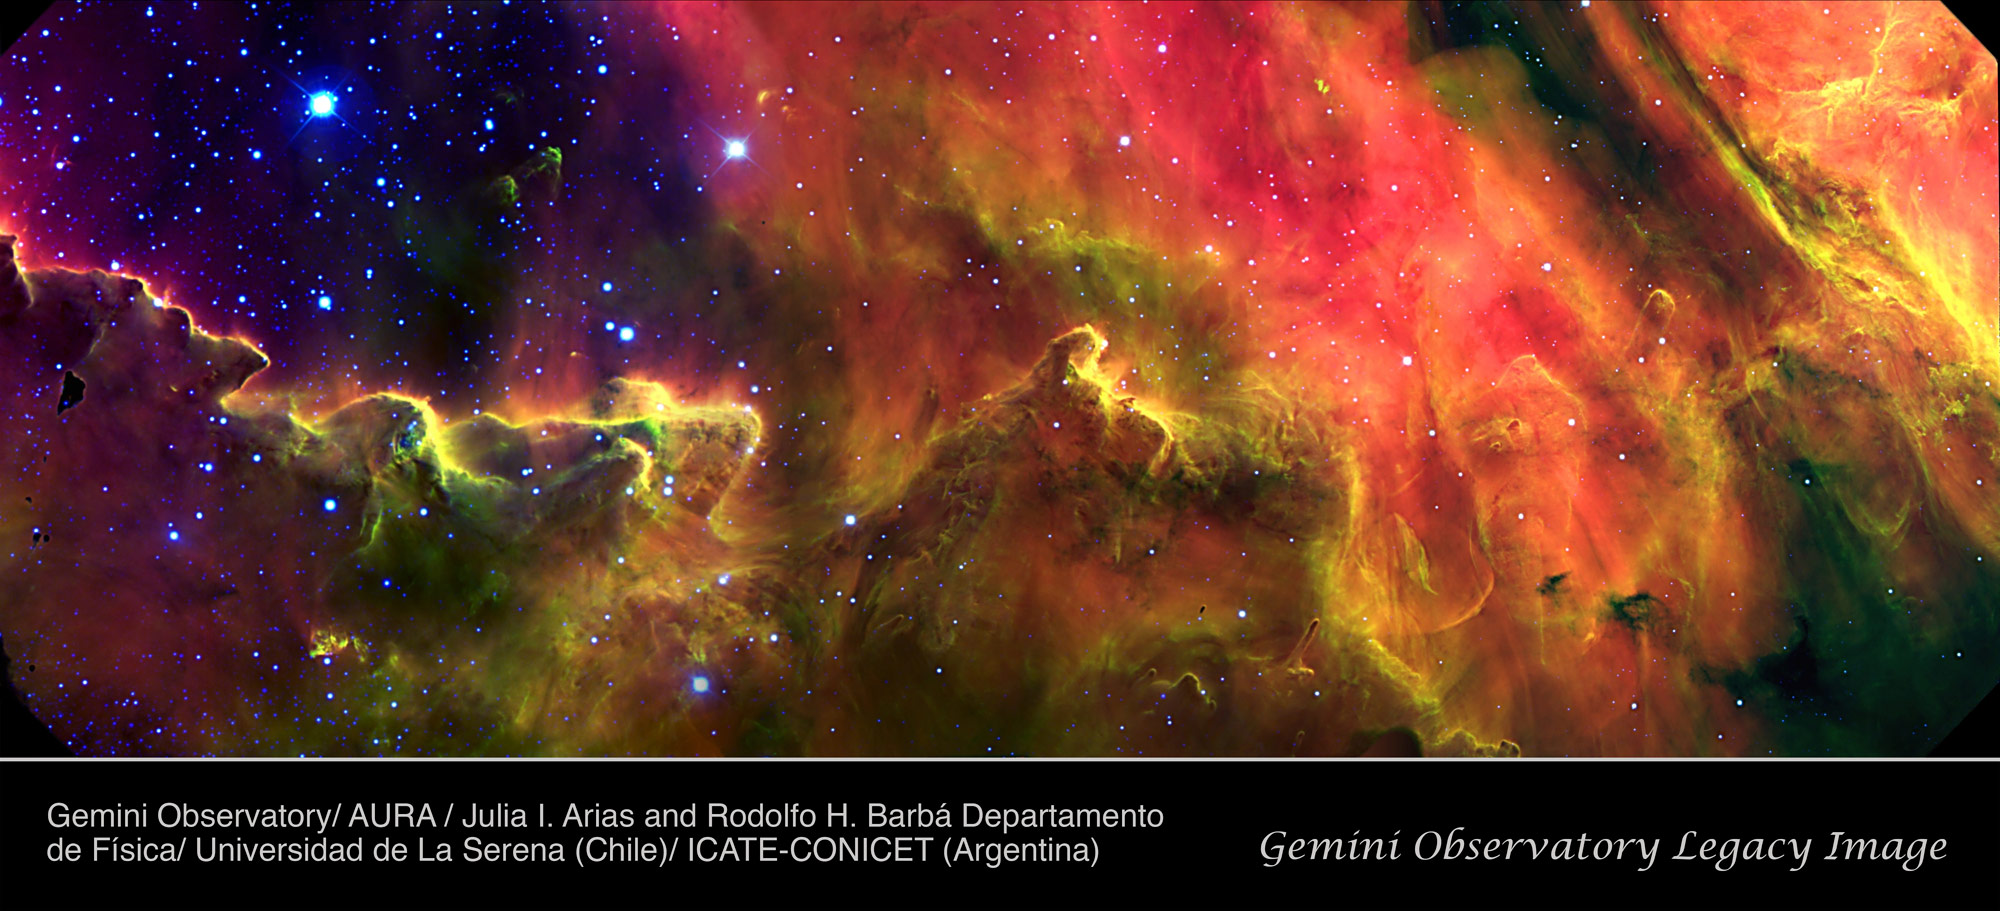 Gemini Observatory Image of the Lagoon Nebula image picture